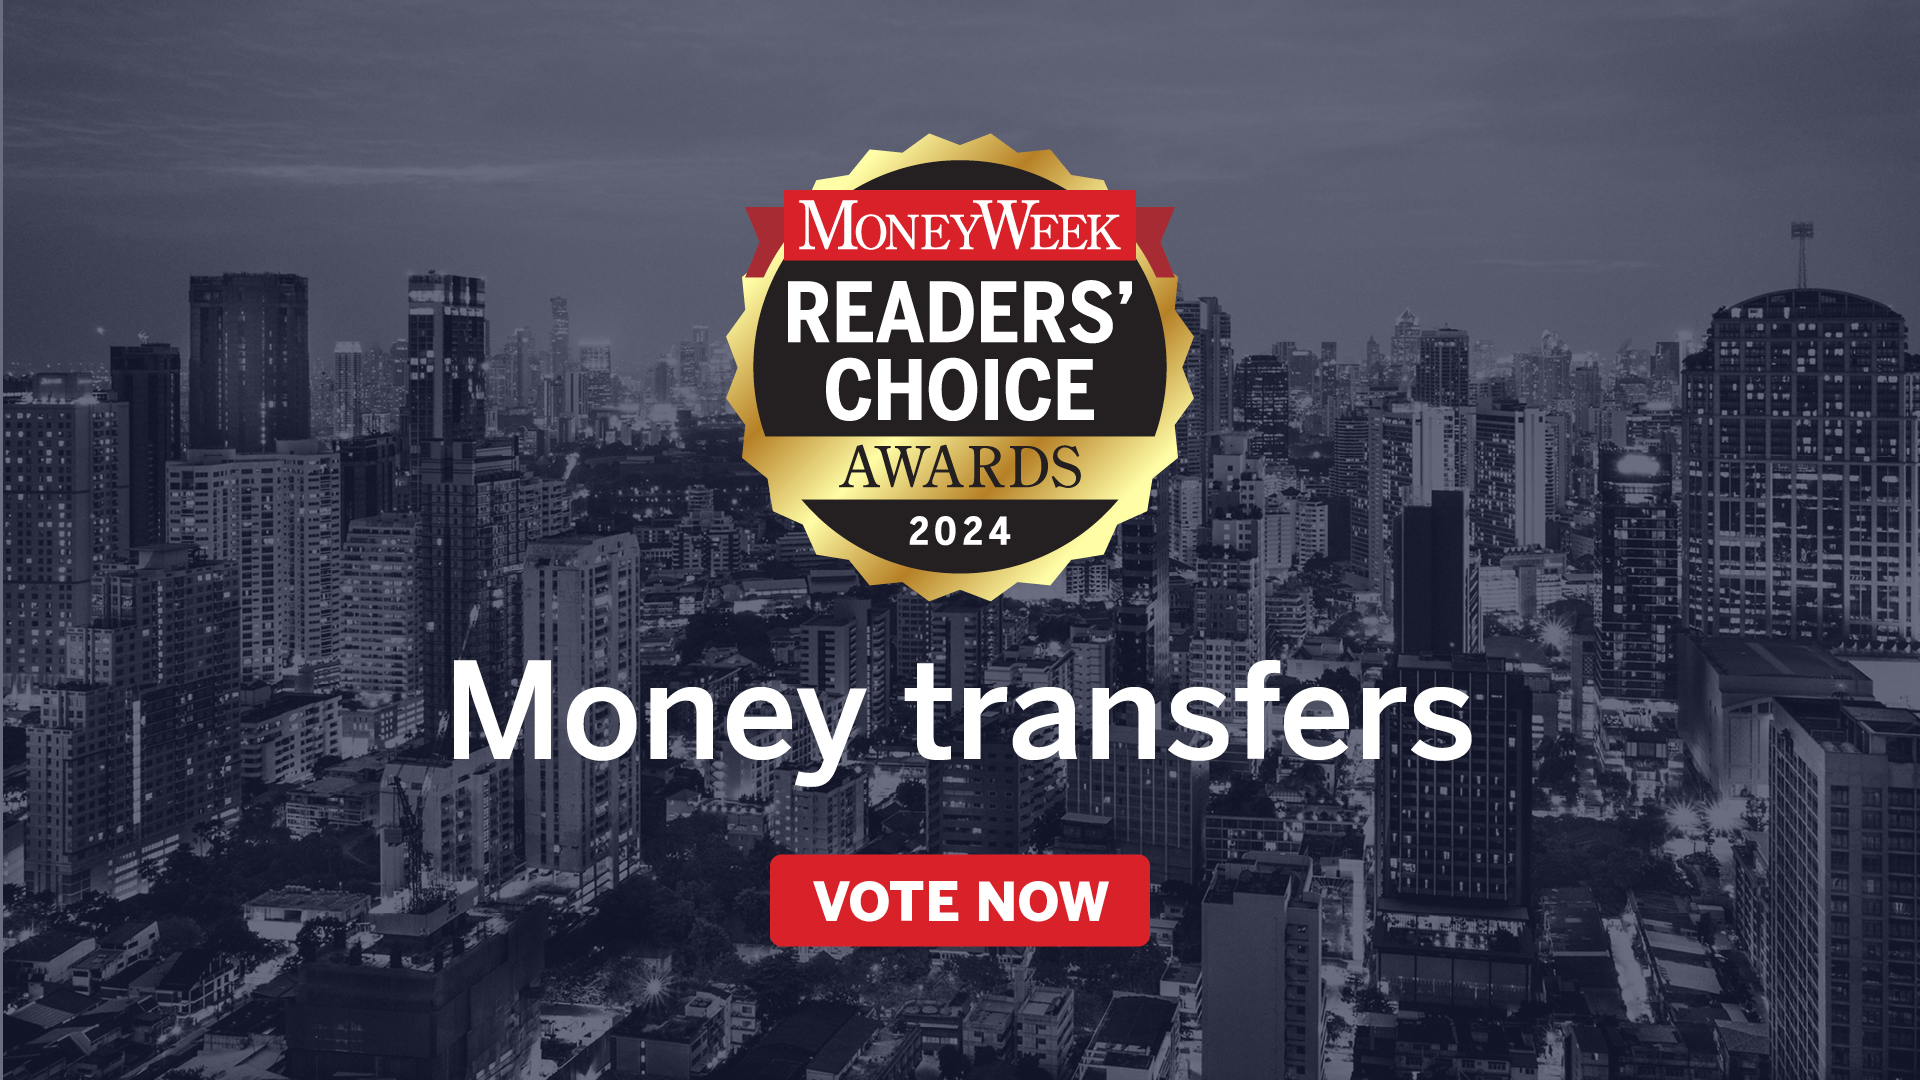 MW Readers' Choice Awards 2024 Money transfers